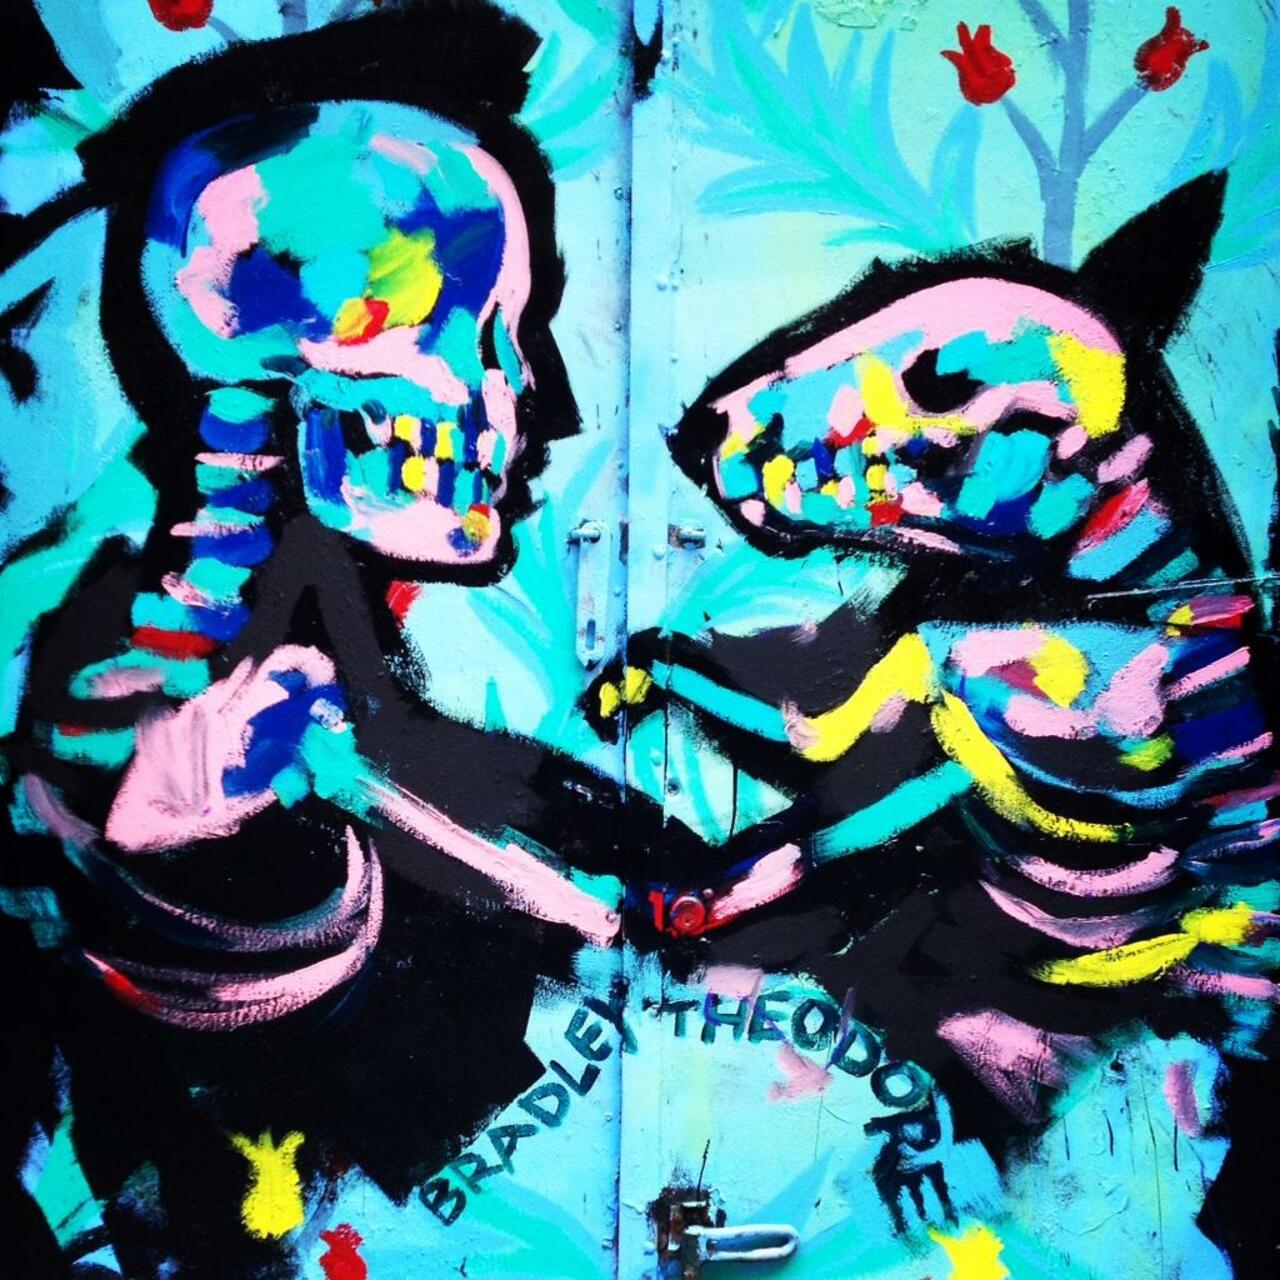 Finally a new #streetArt image! #365dayproject #308 #art #photography #soho #nyc #ny #graffiti http://t.co/gEQskVoJ6g